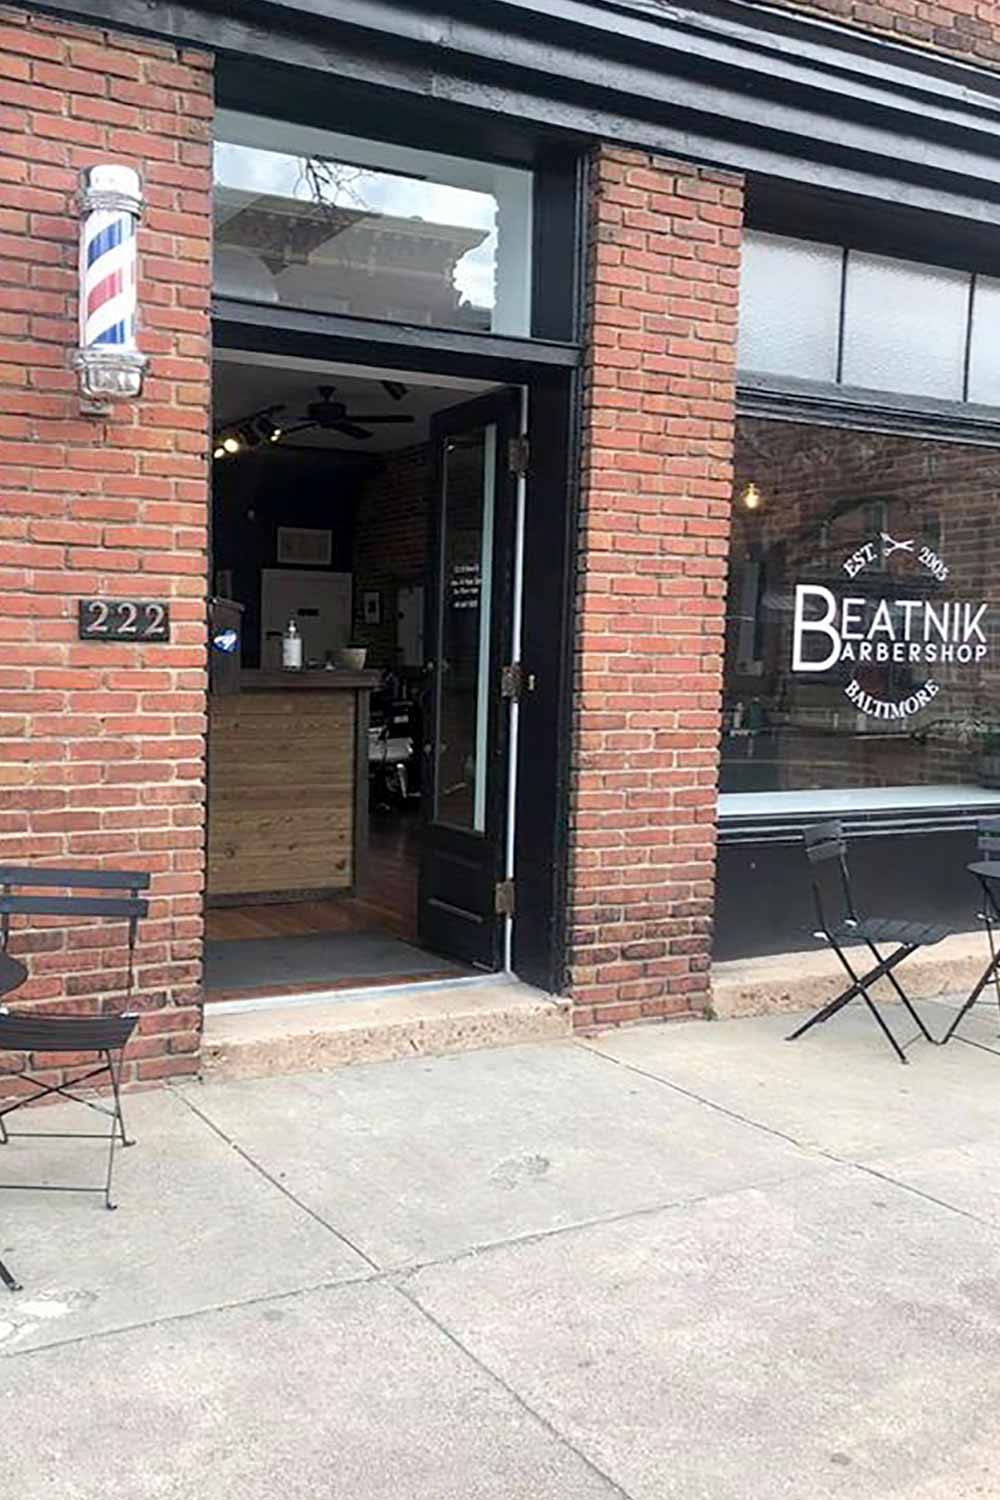 The Beatnik Barbershop 4